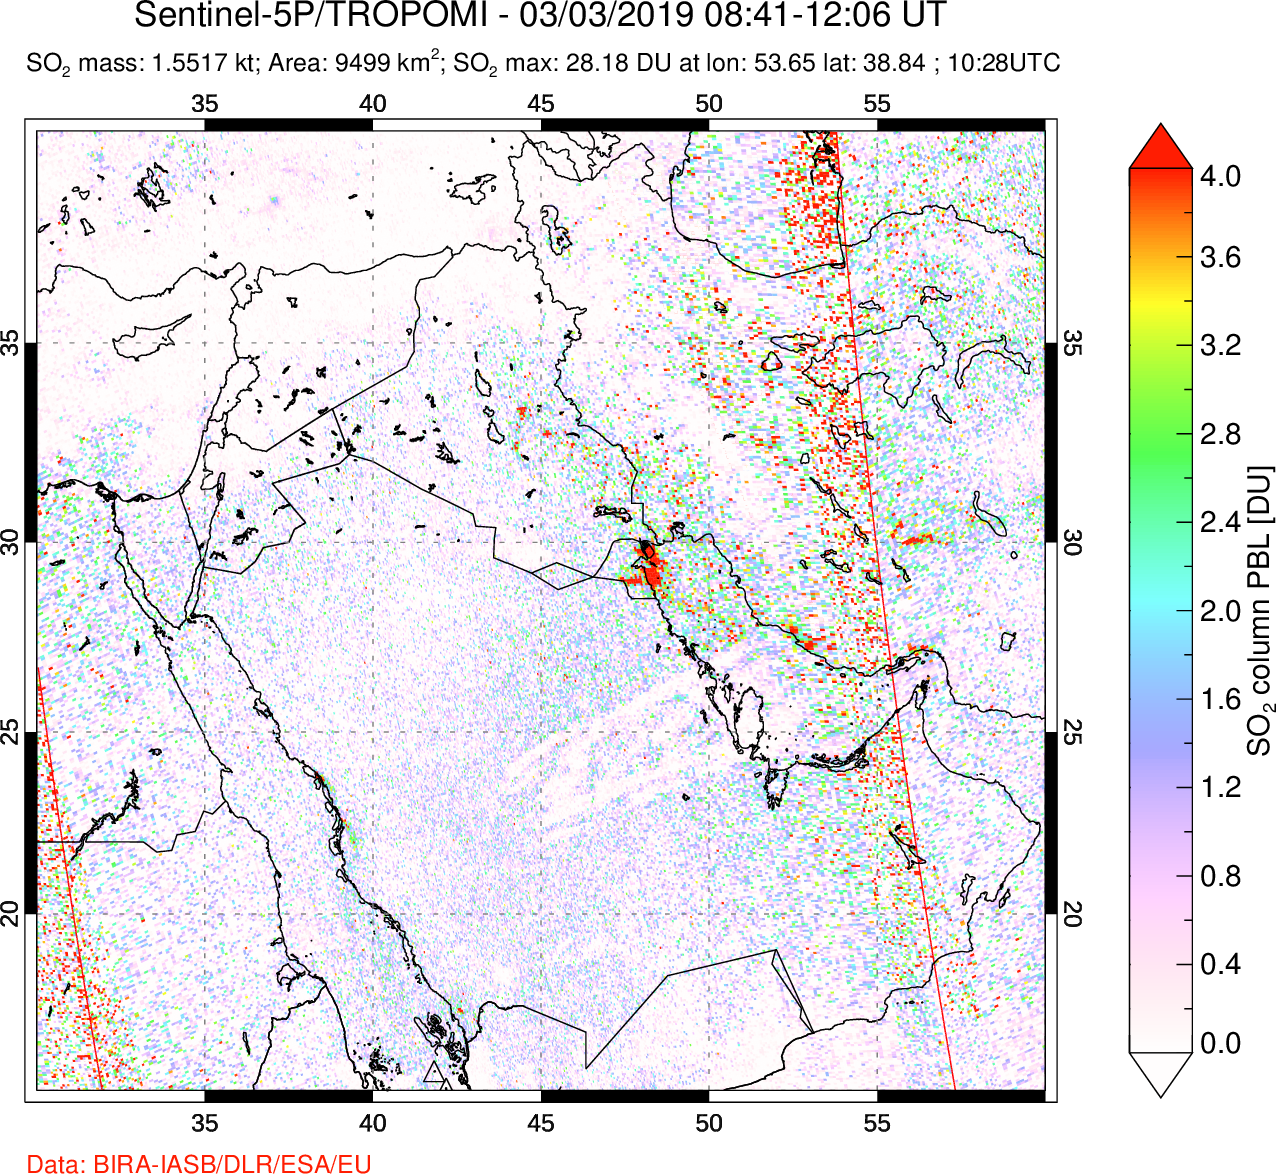 A sulfur dioxide image over Middle East on Mar 03, 2019.